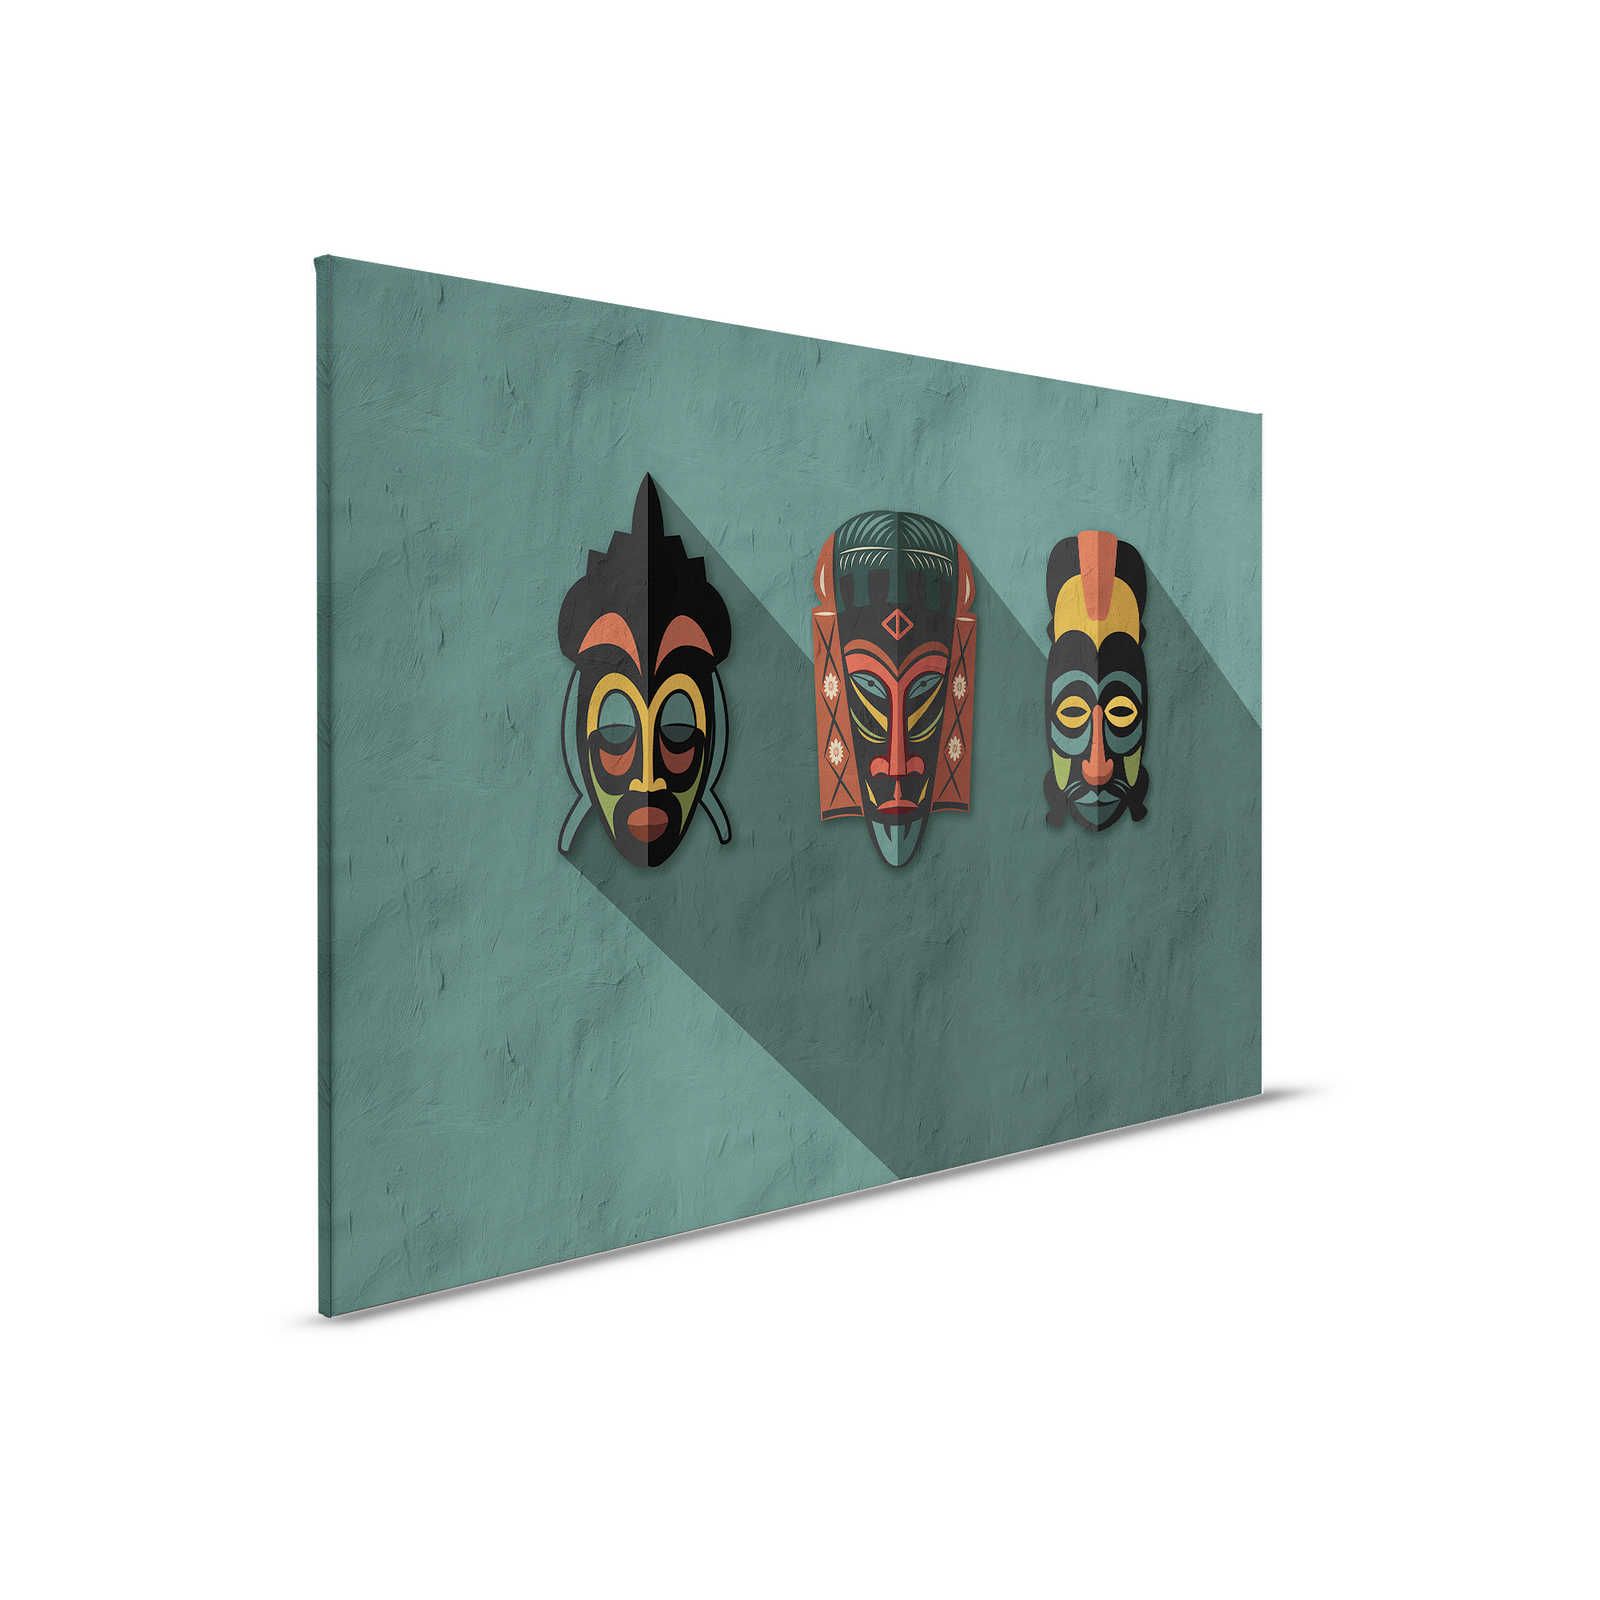         Zulu 3 - Canvas painting Petrol Africa Masks Zulu Design - 0,90 m x 0,60 m
    